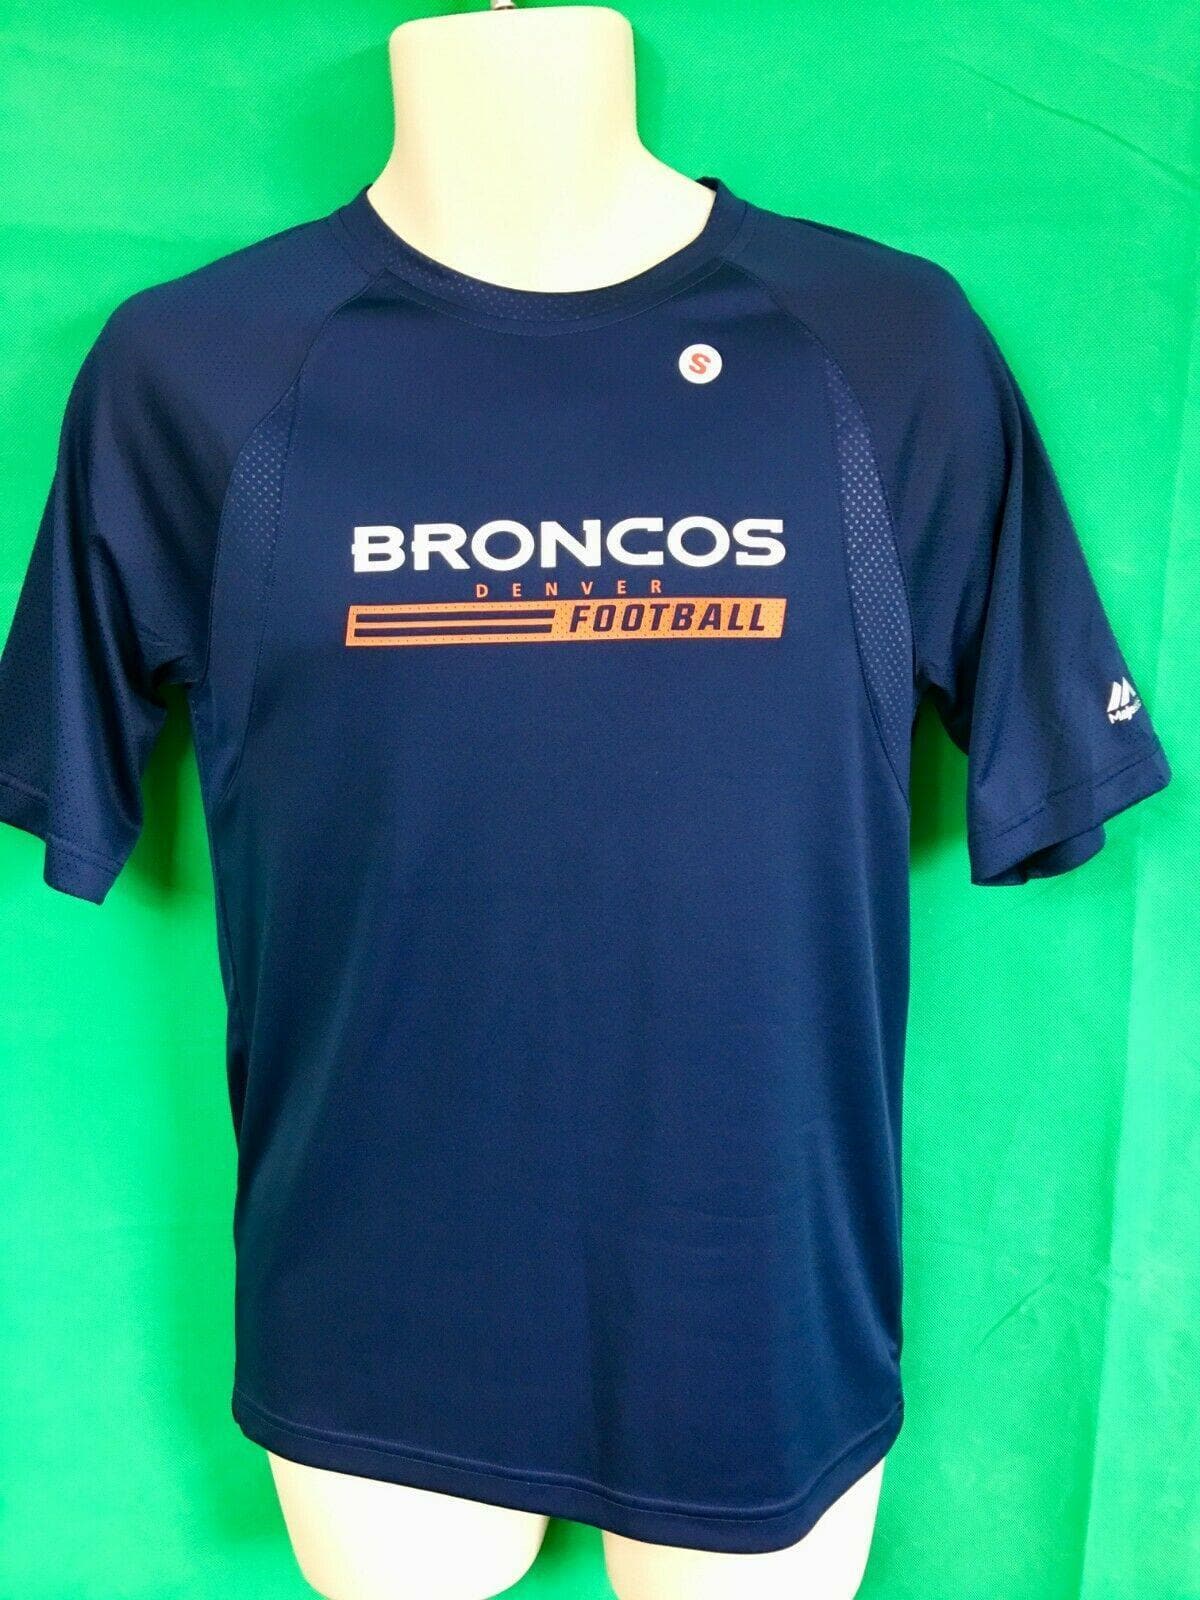 NFL Denver Broncos Majestic Cool Base T-Shirt Men's Small NWT